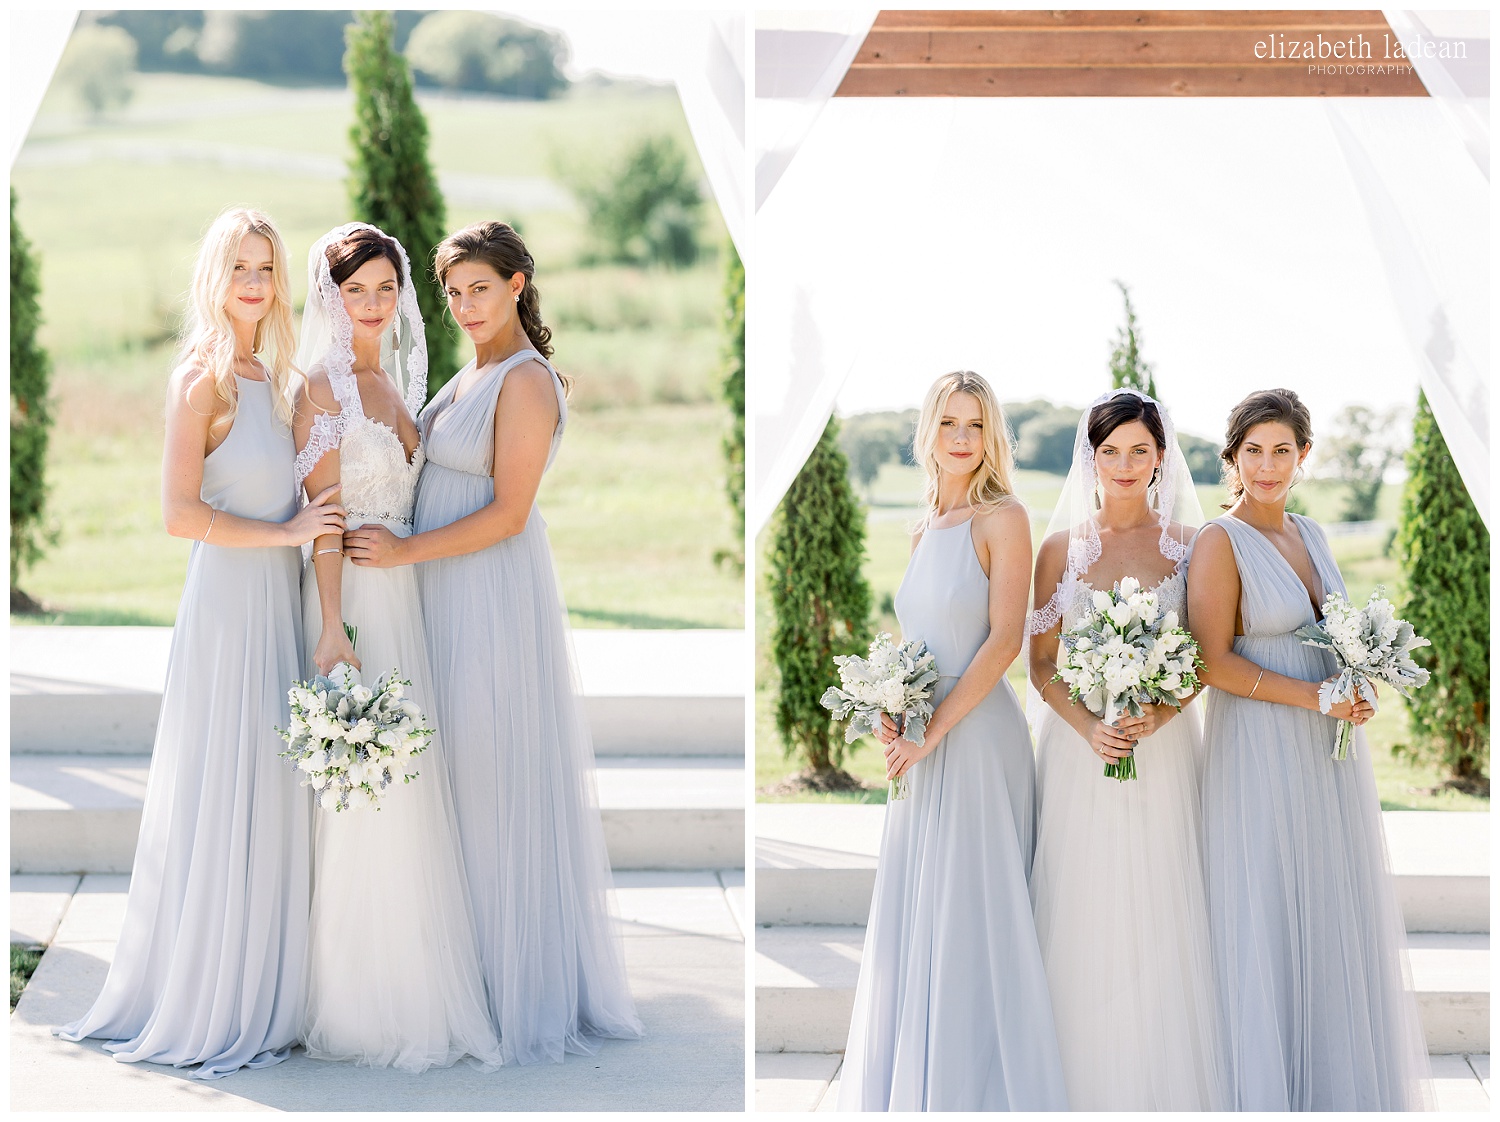 blue-and-white-old-italian-themed-wedding-1890-kansas-city-July2018-elizabeth-ladean-photography-photo-_9749.jpg